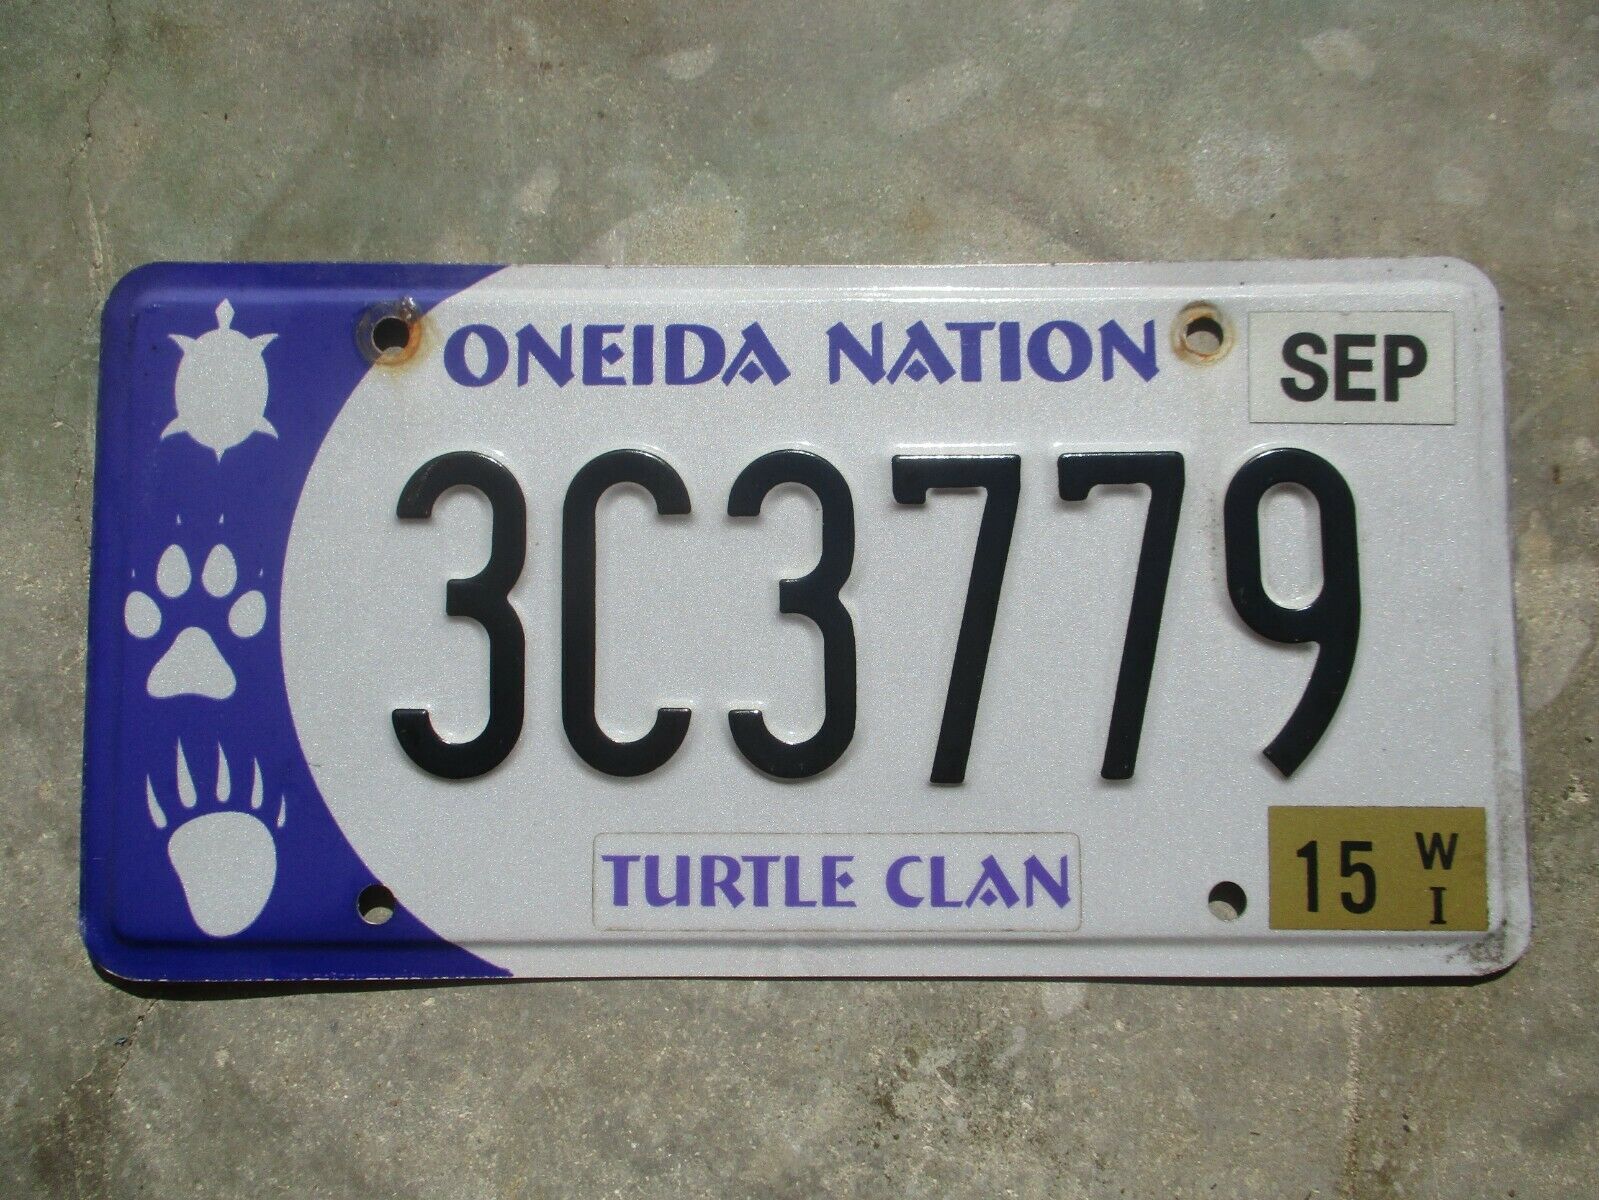 Wisconsin 2015 Oneida Nation Turtle Clan License Plate #    3c3779